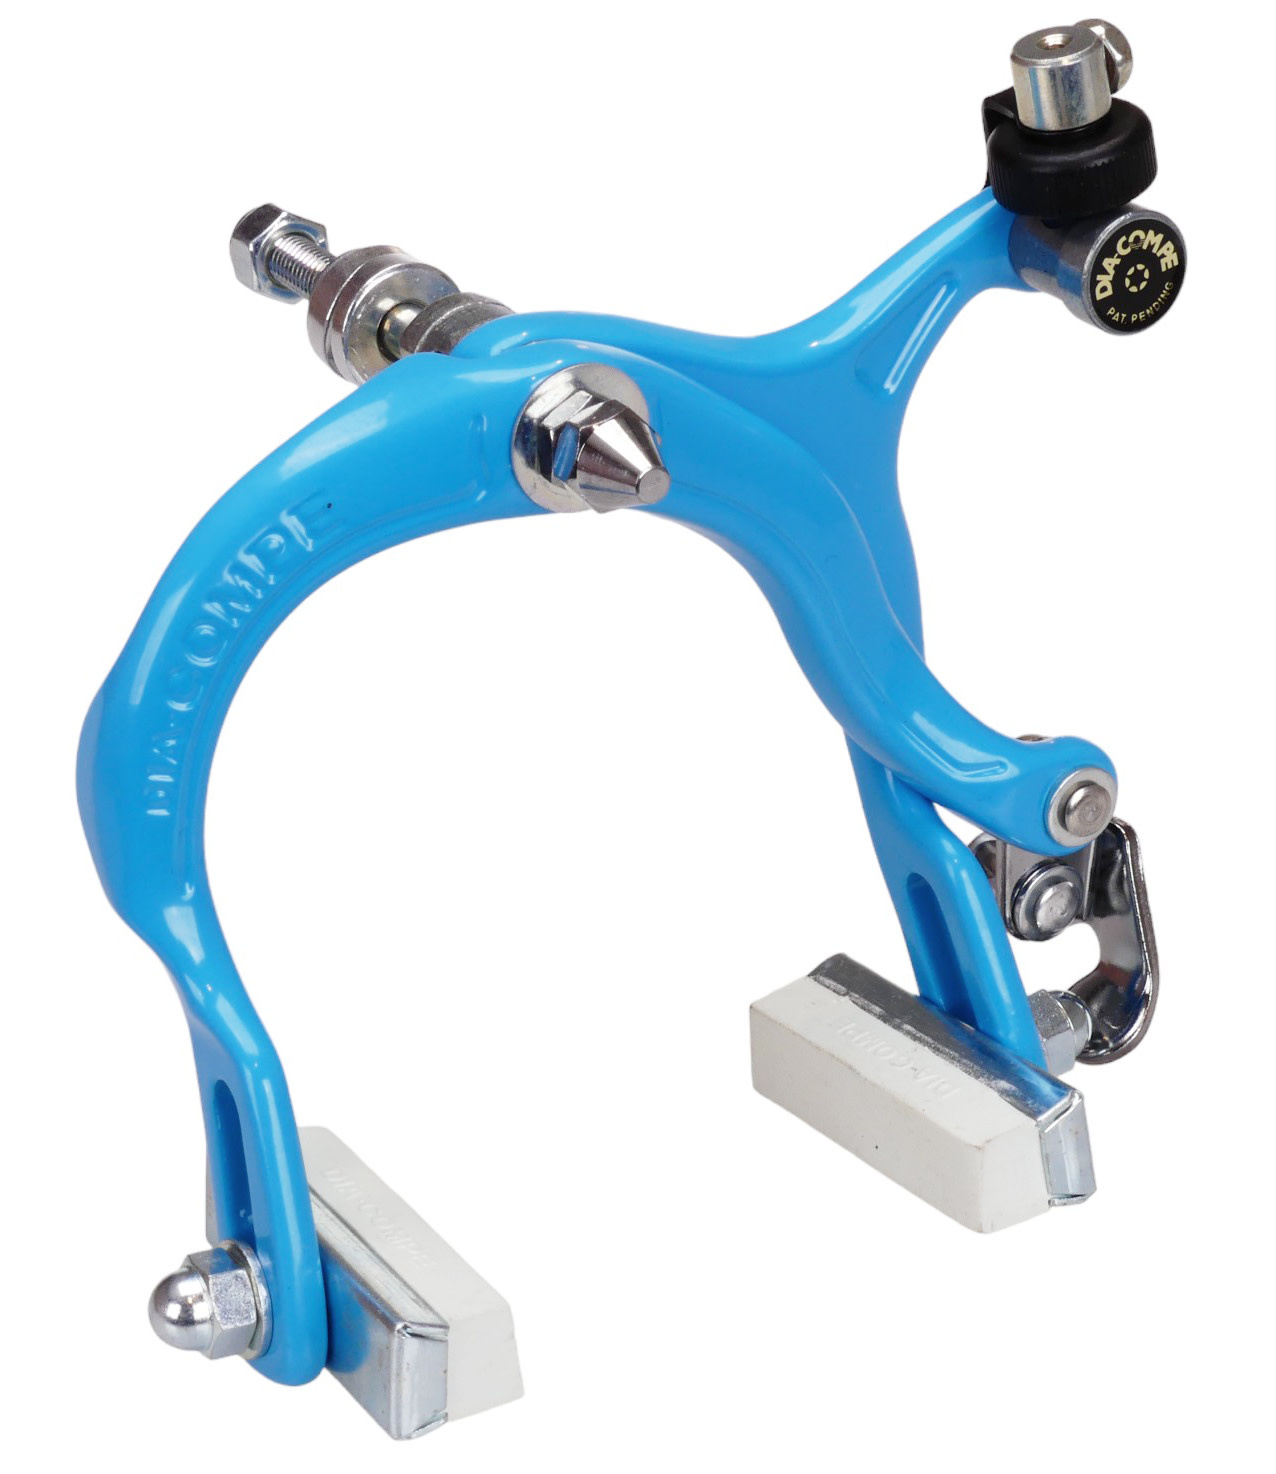 Dia-Compe FRONT 883 Nippon BMX bicycle brake caliper - MAUI BLUE